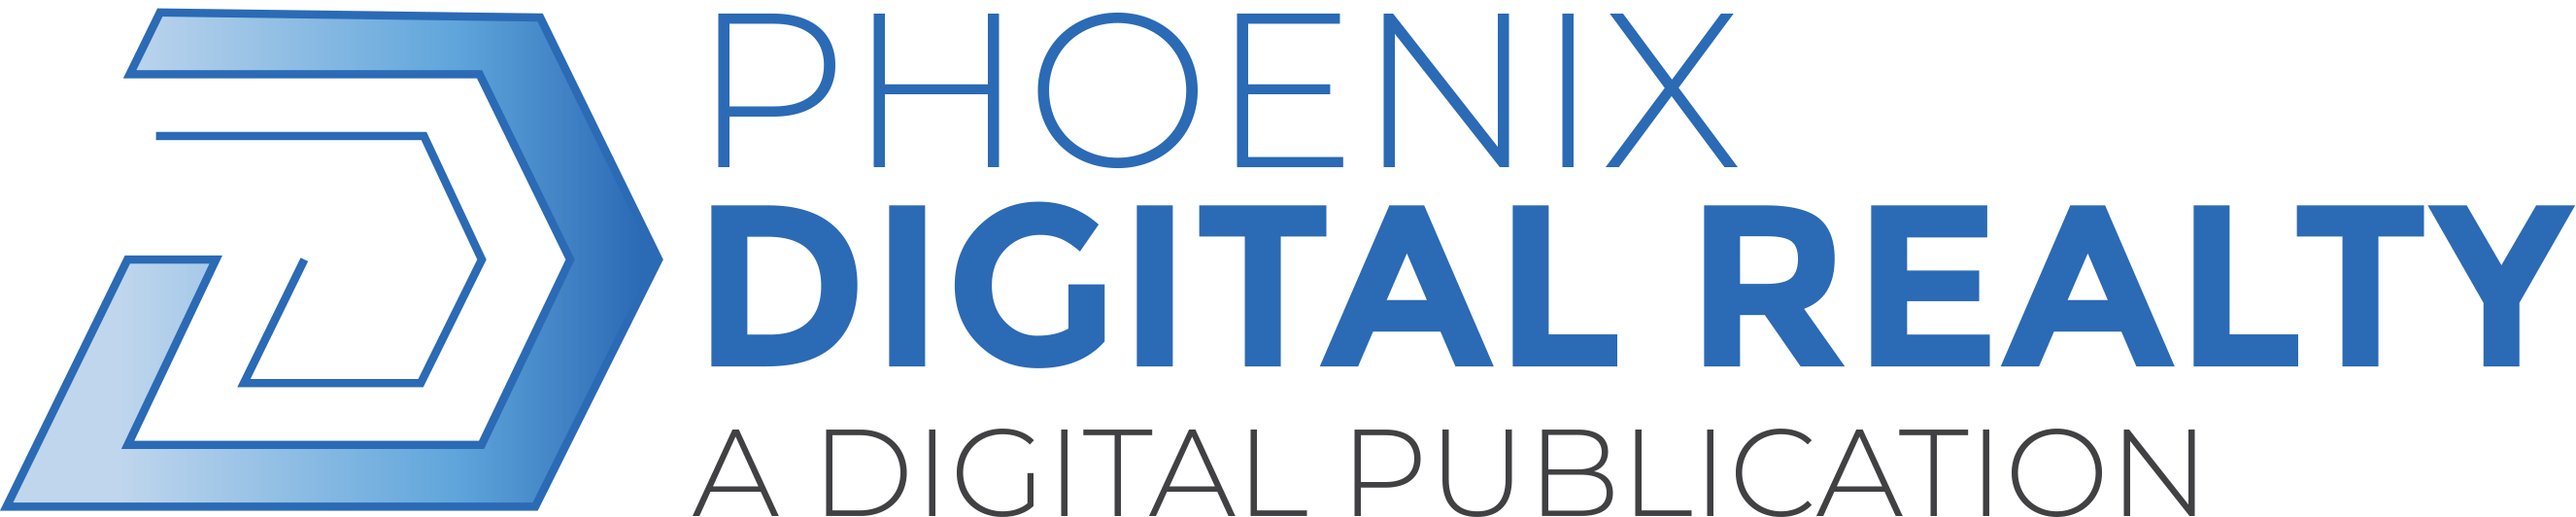 Phoenix Digital Realty Logo